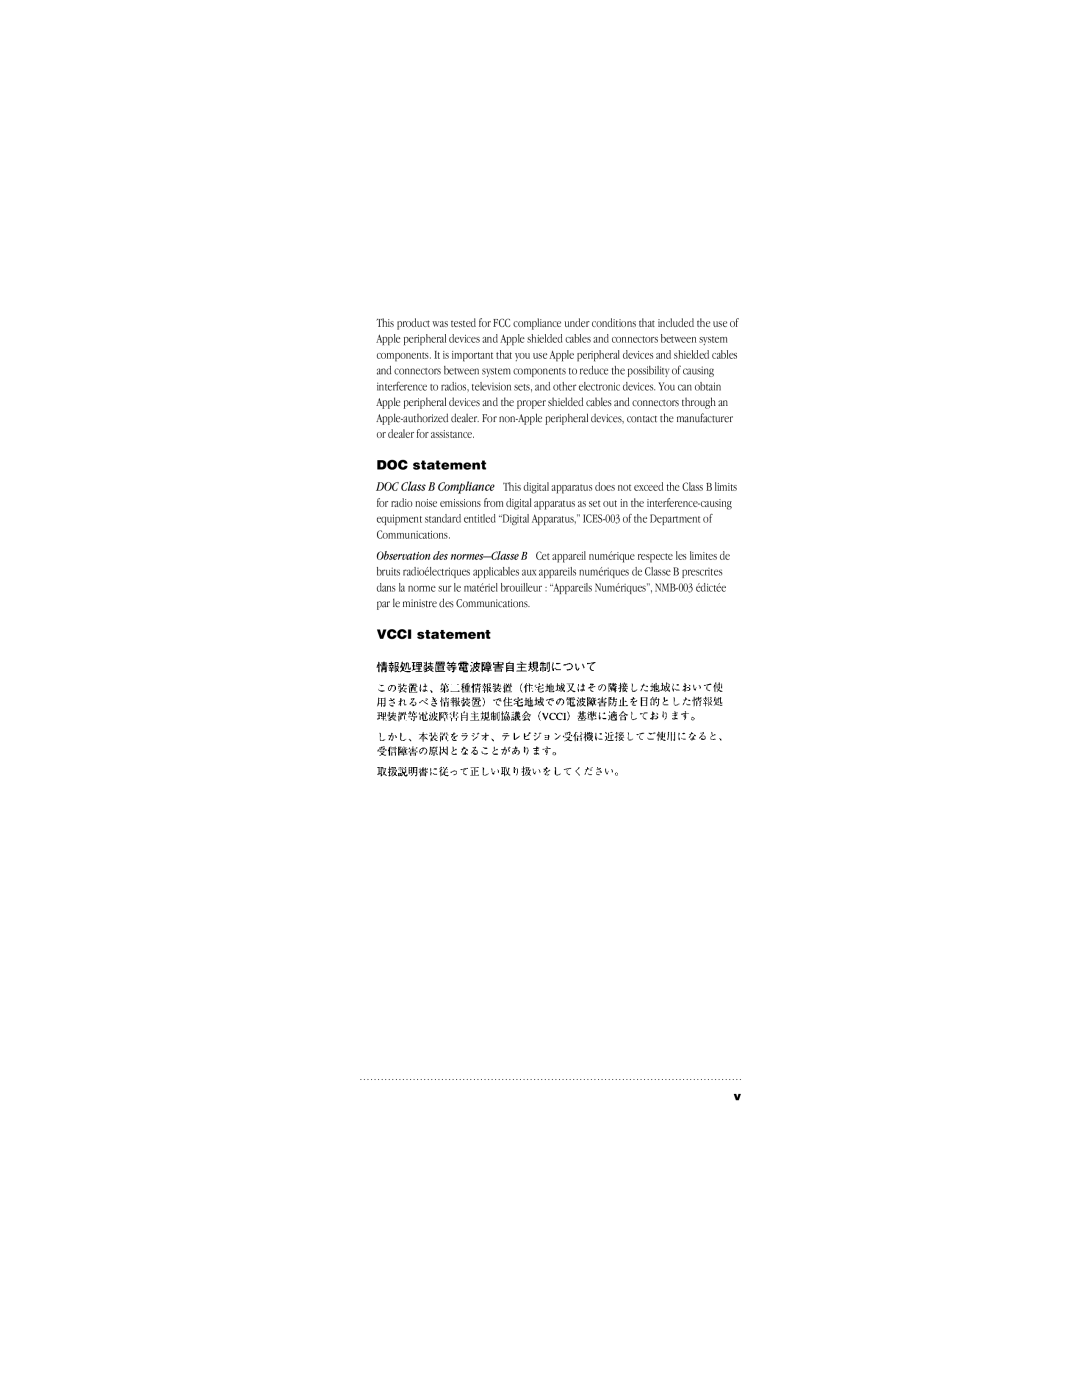 Apple 030-8681-A, 95014-2084 user manual Vcci statement 